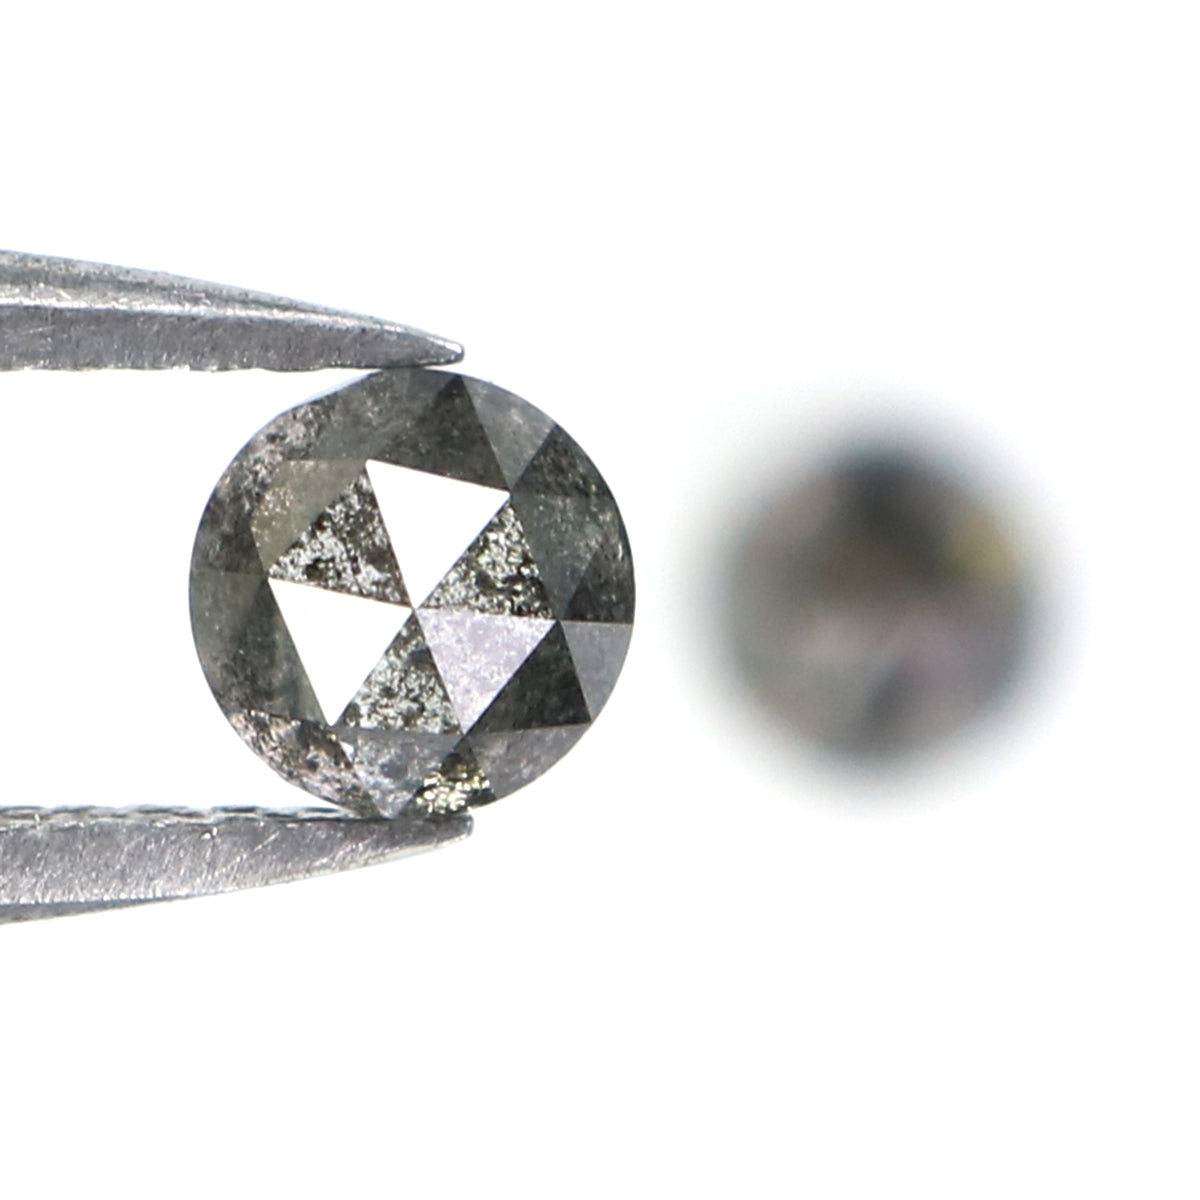 Natural Loose Round Rose Cut Diamond, Salt And Pepper Round Diamond, Natural Loose Diamond, Rose Cut Diamond, 0.83 CT Round Shape L2810